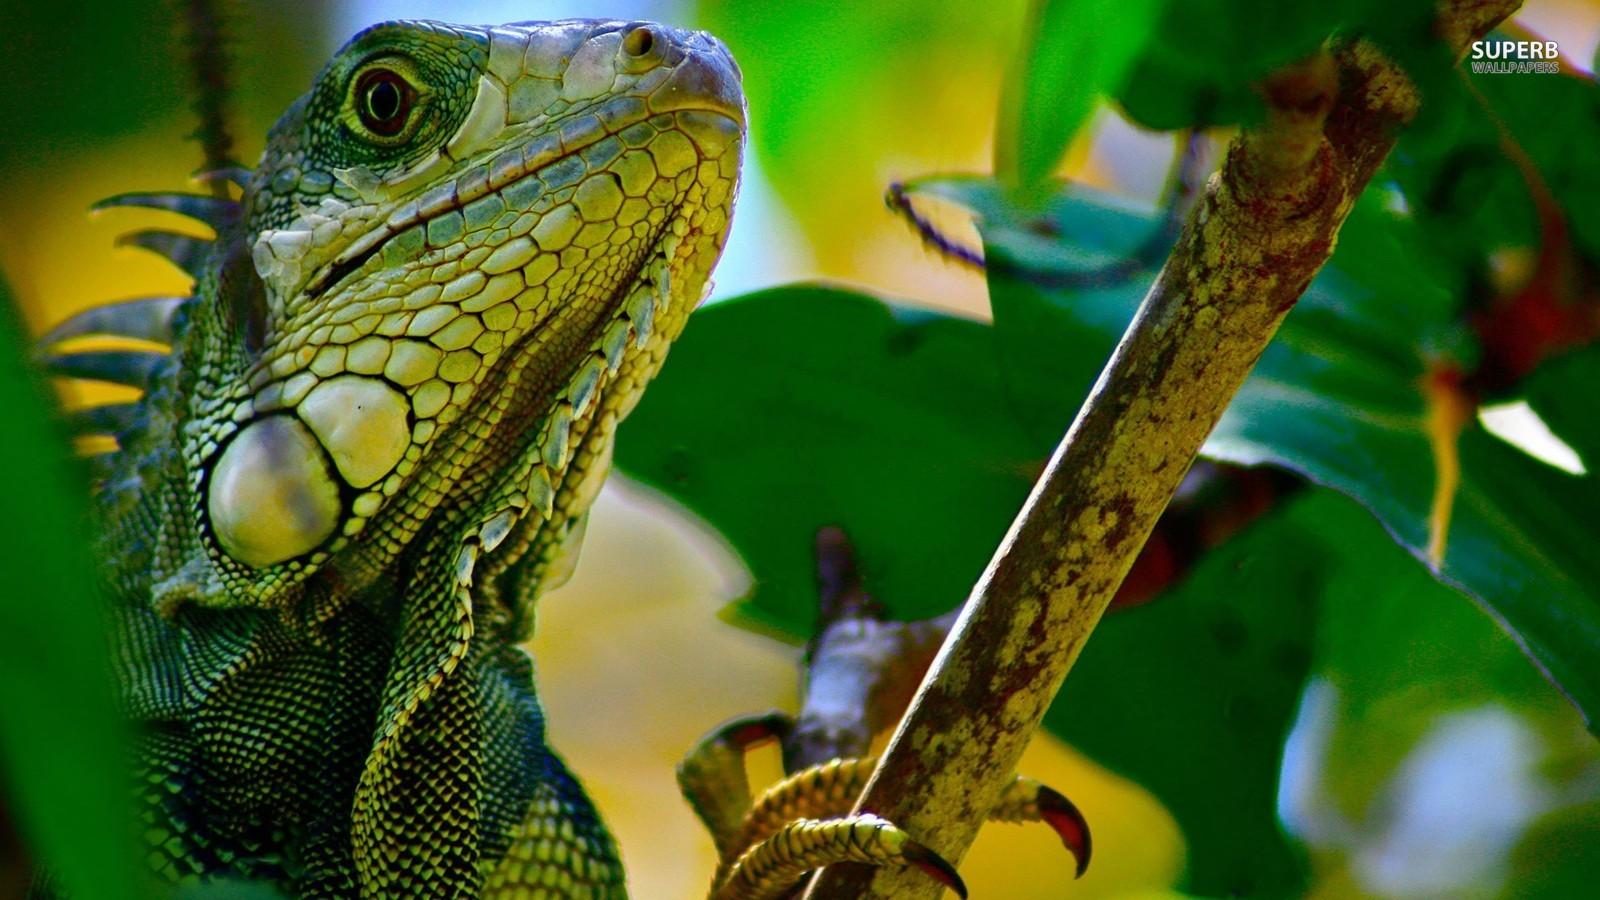 lizards image Iguana HD wallpaper and background photo